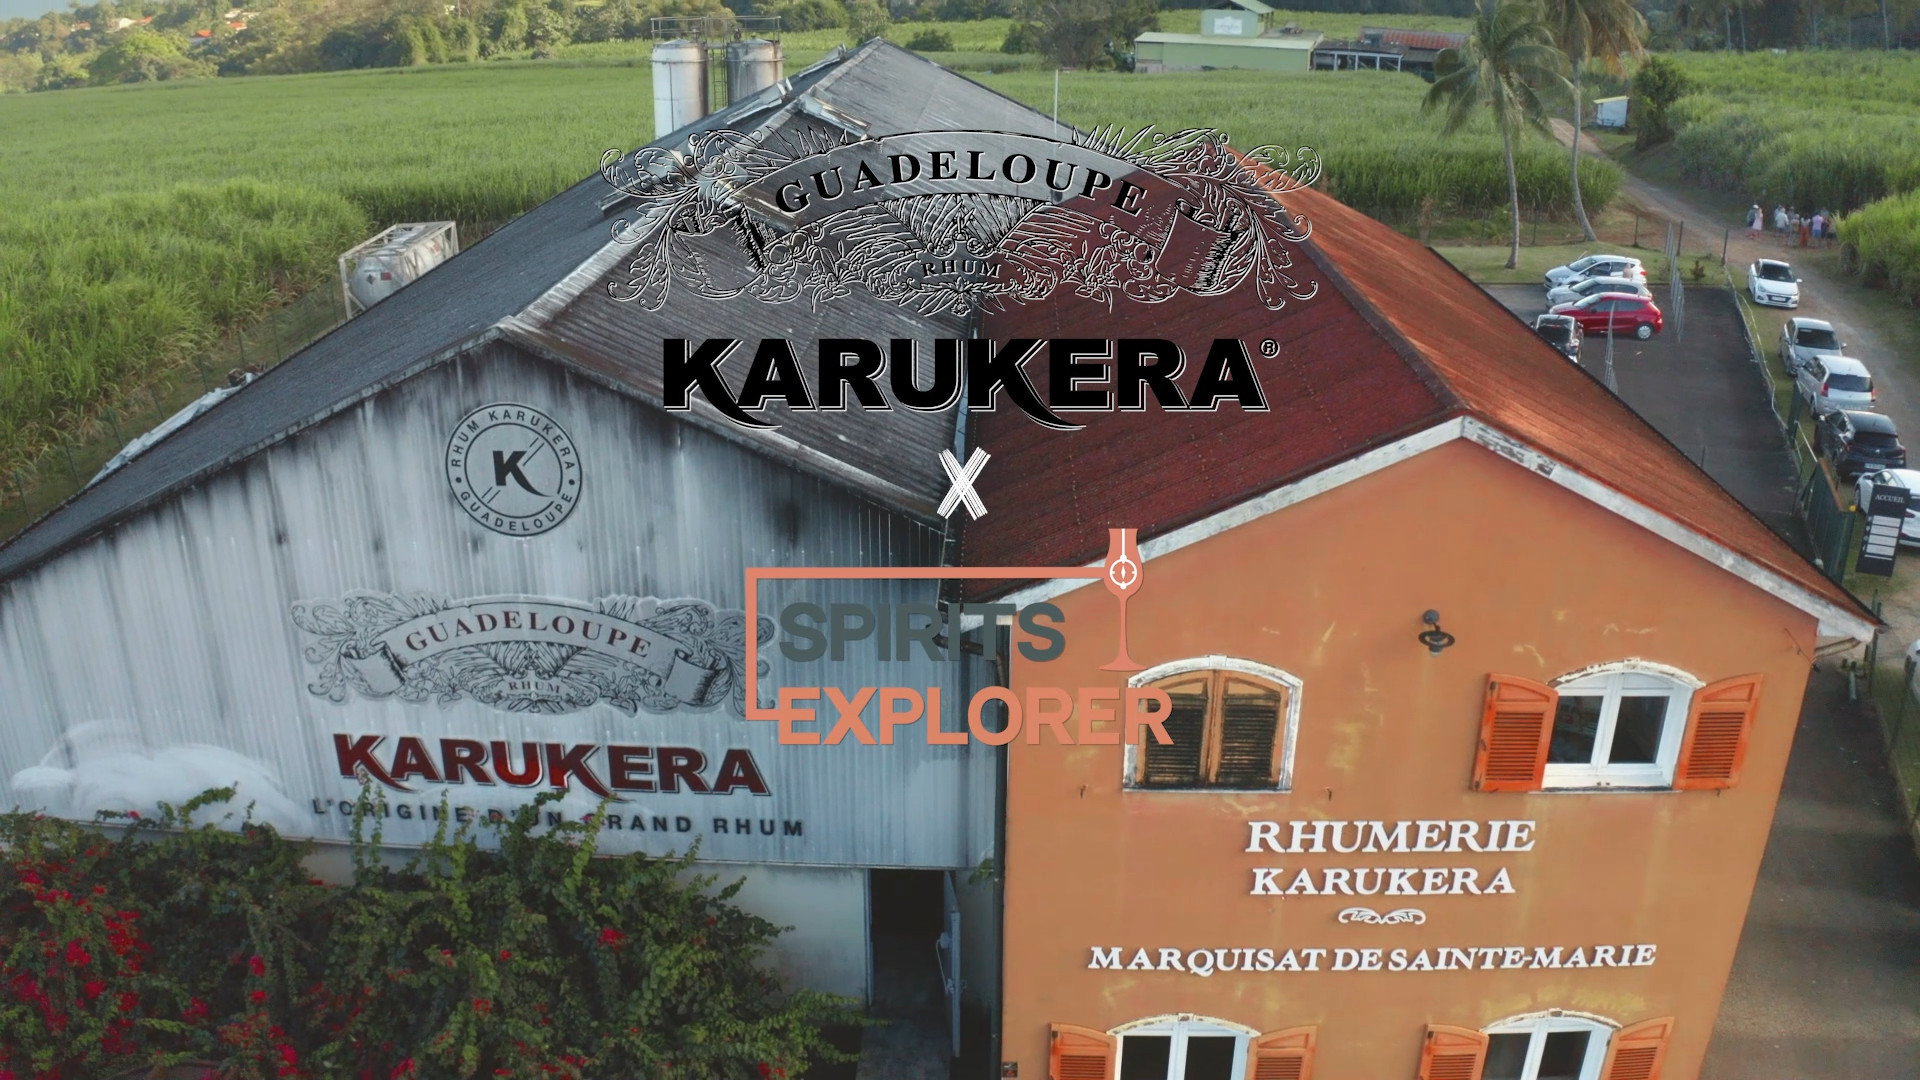 Spirits Explorer en Guadeloupe Épisode 7 – Rhumerie Karukera